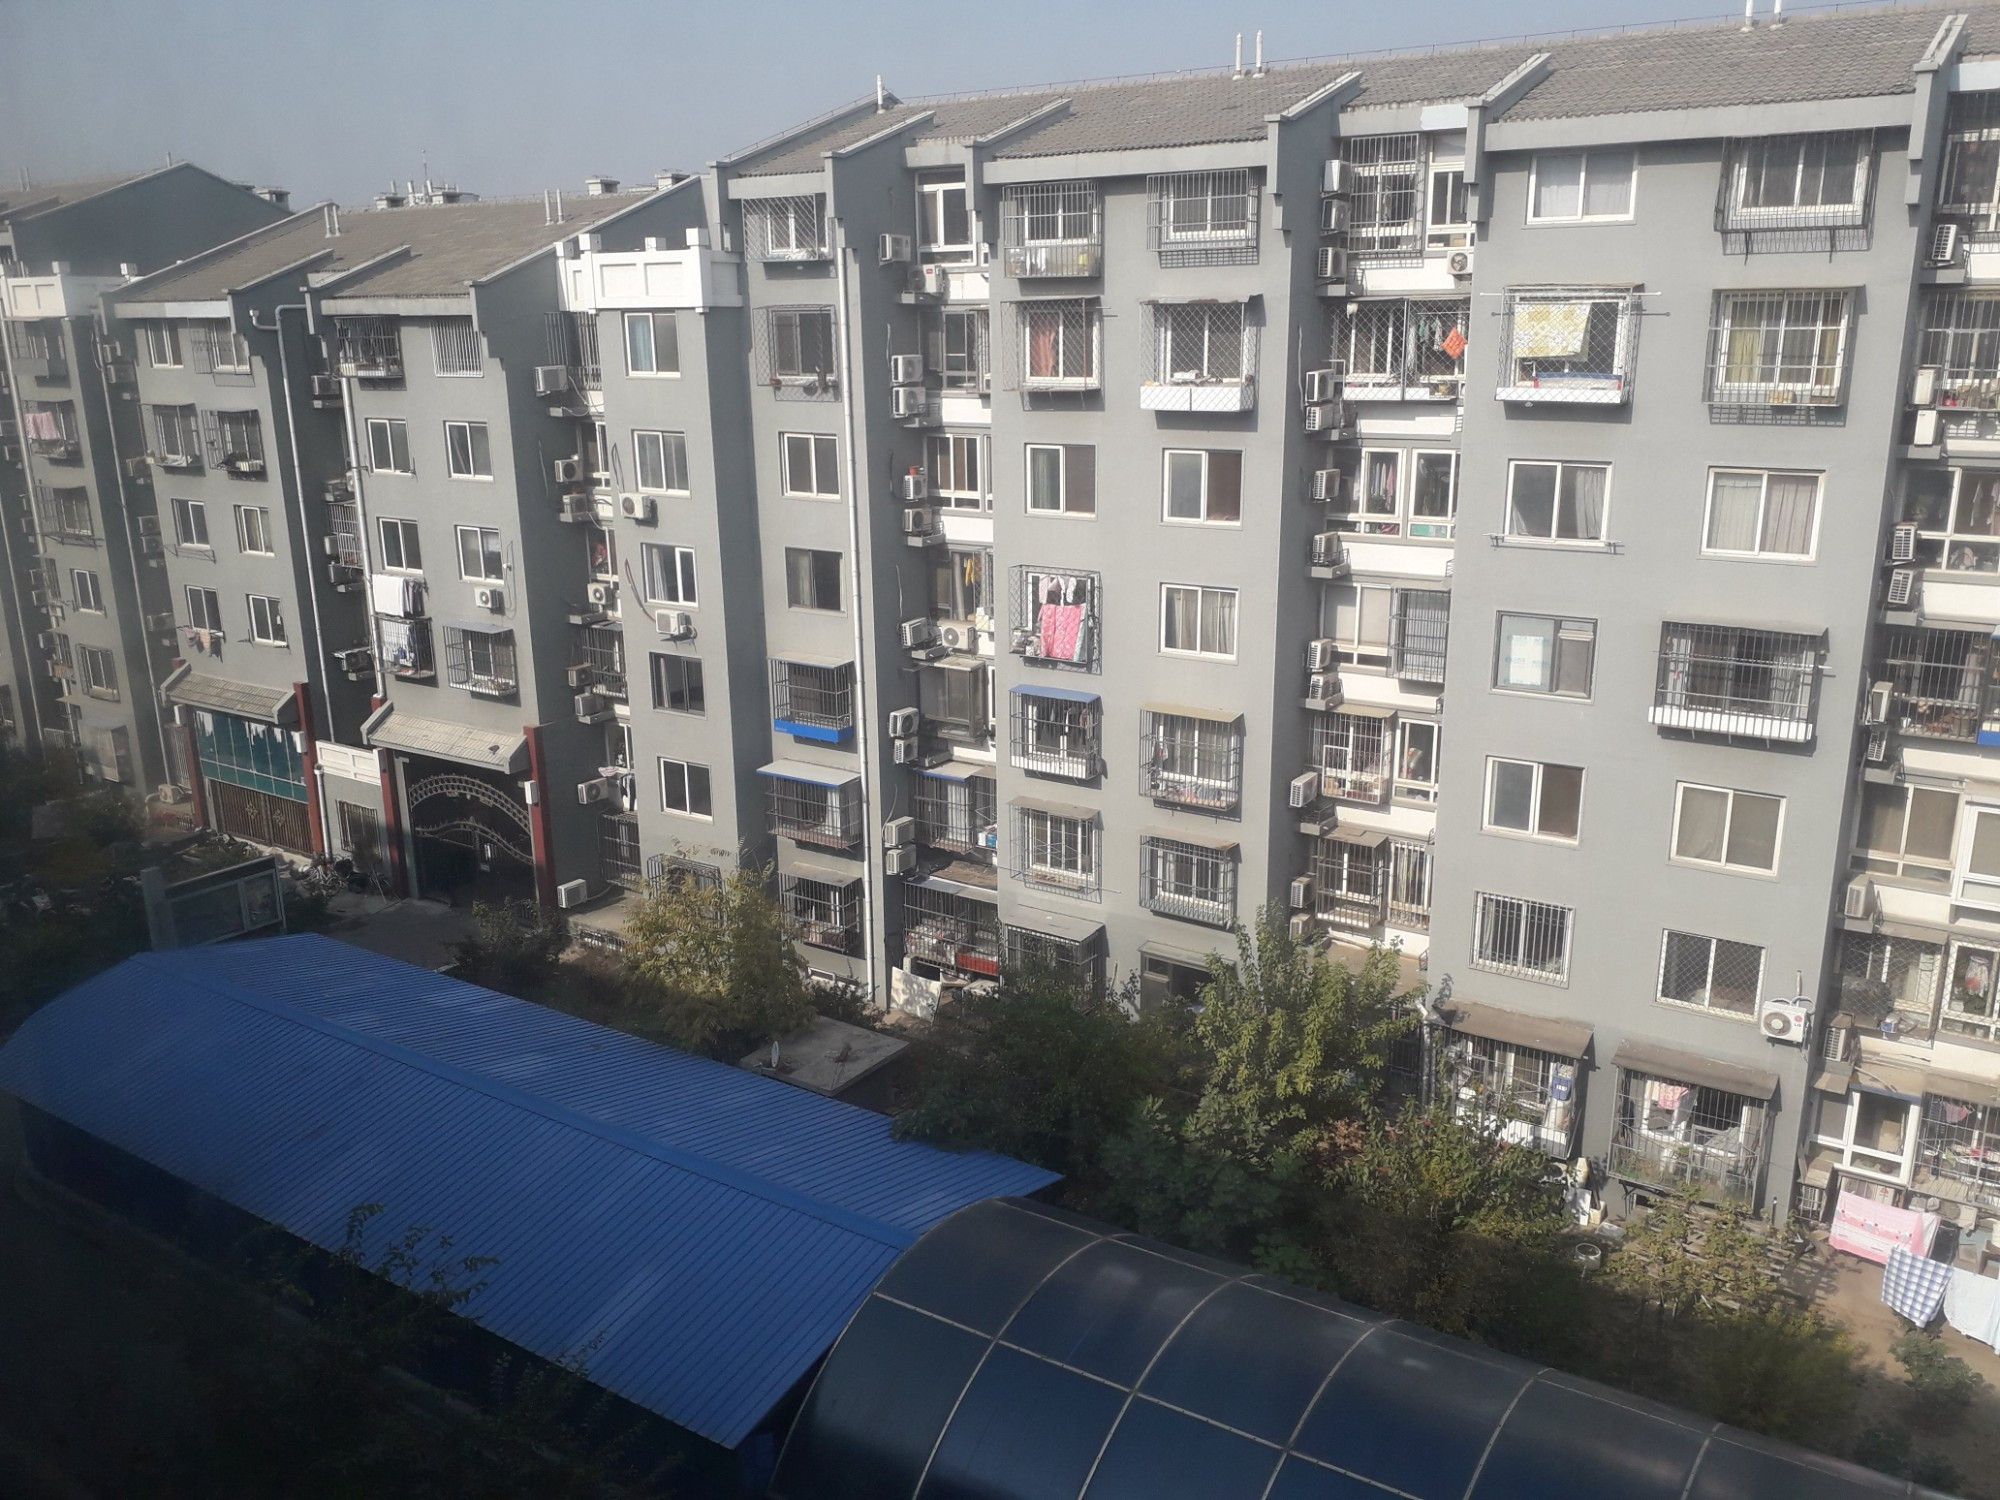 Chinese communist Tower blocks taken from the hotel room window, Beijing